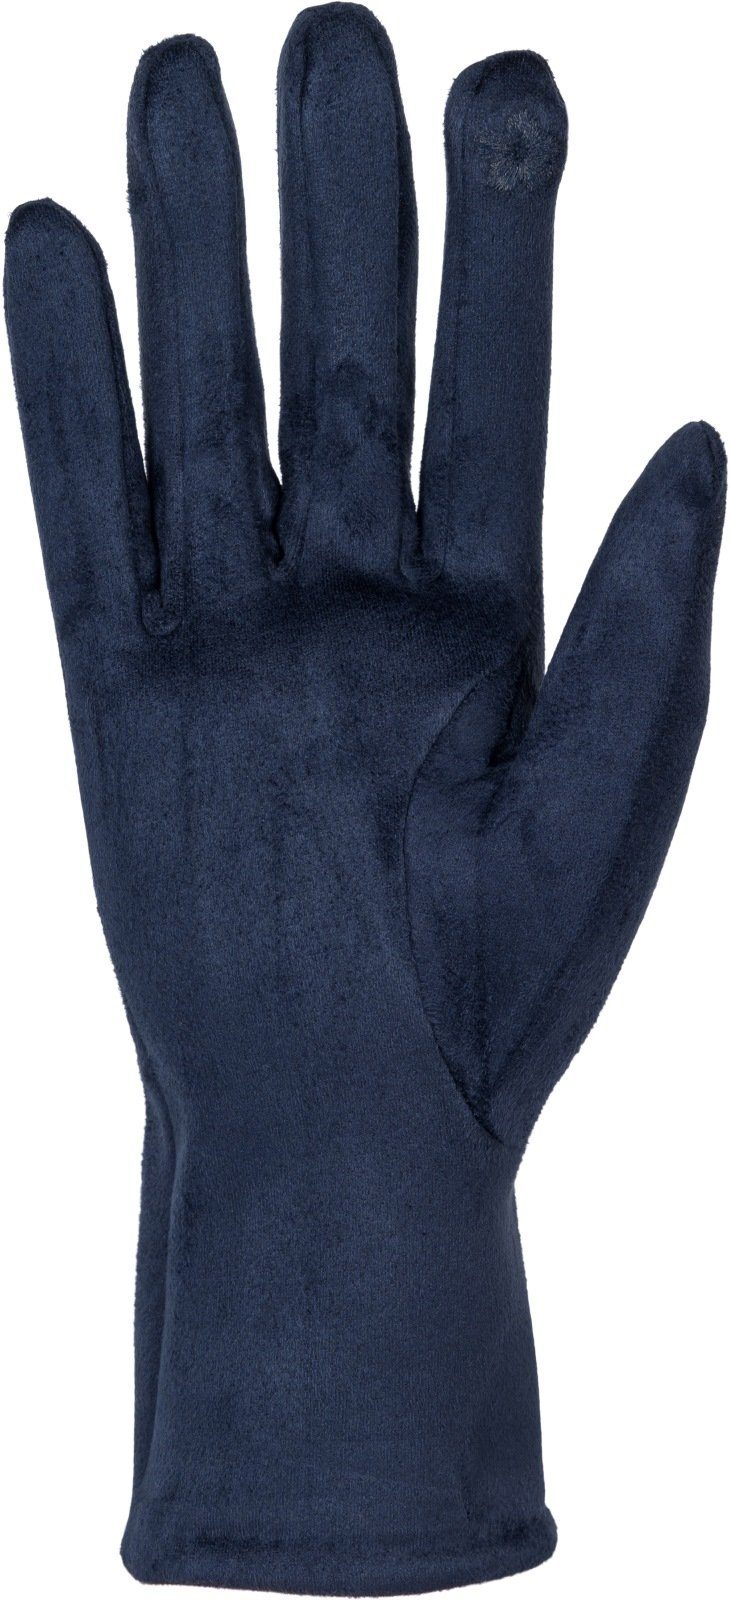 Touchscreen Handschuhe Fleecehandschuhe Einfarbige Ziernähte styleBREAKER Dunkelblau